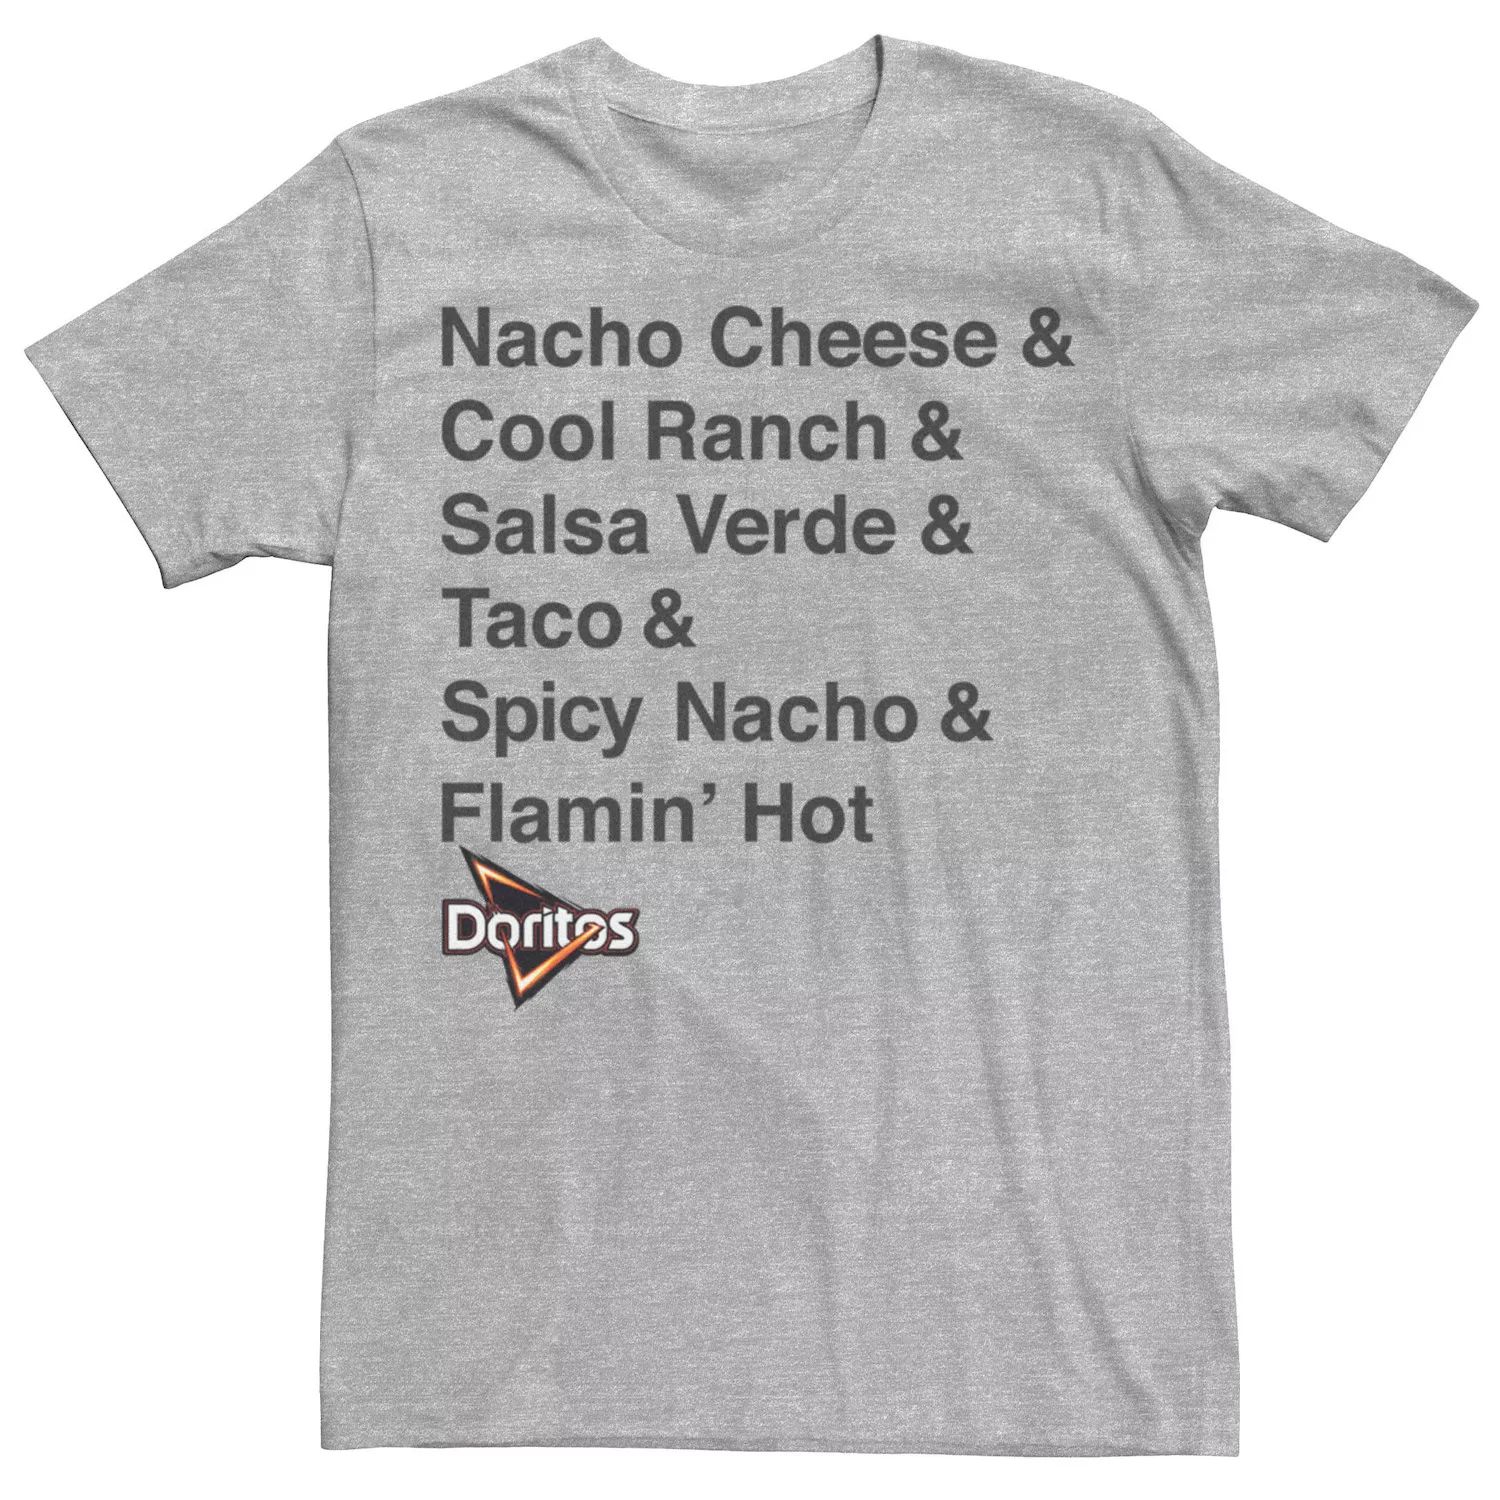 Мужская футболка Doritos Tortilla Chips Flavors Licensed Character мужская футболка doritos tortilla chips flavors licensed character